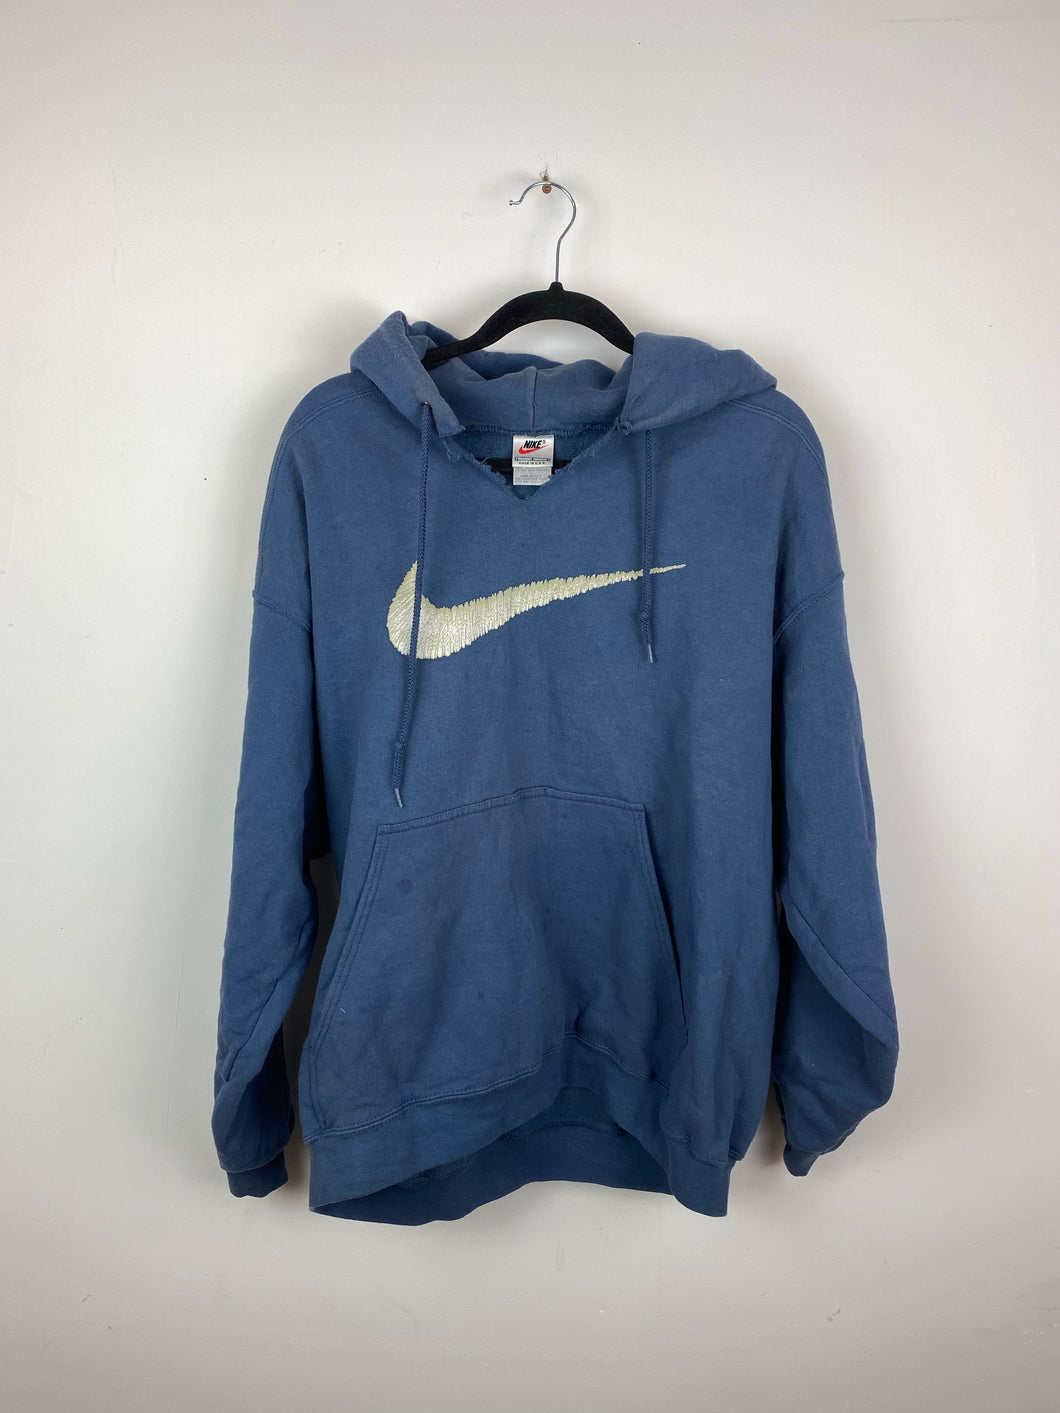 90s made in USA Nike hoodie